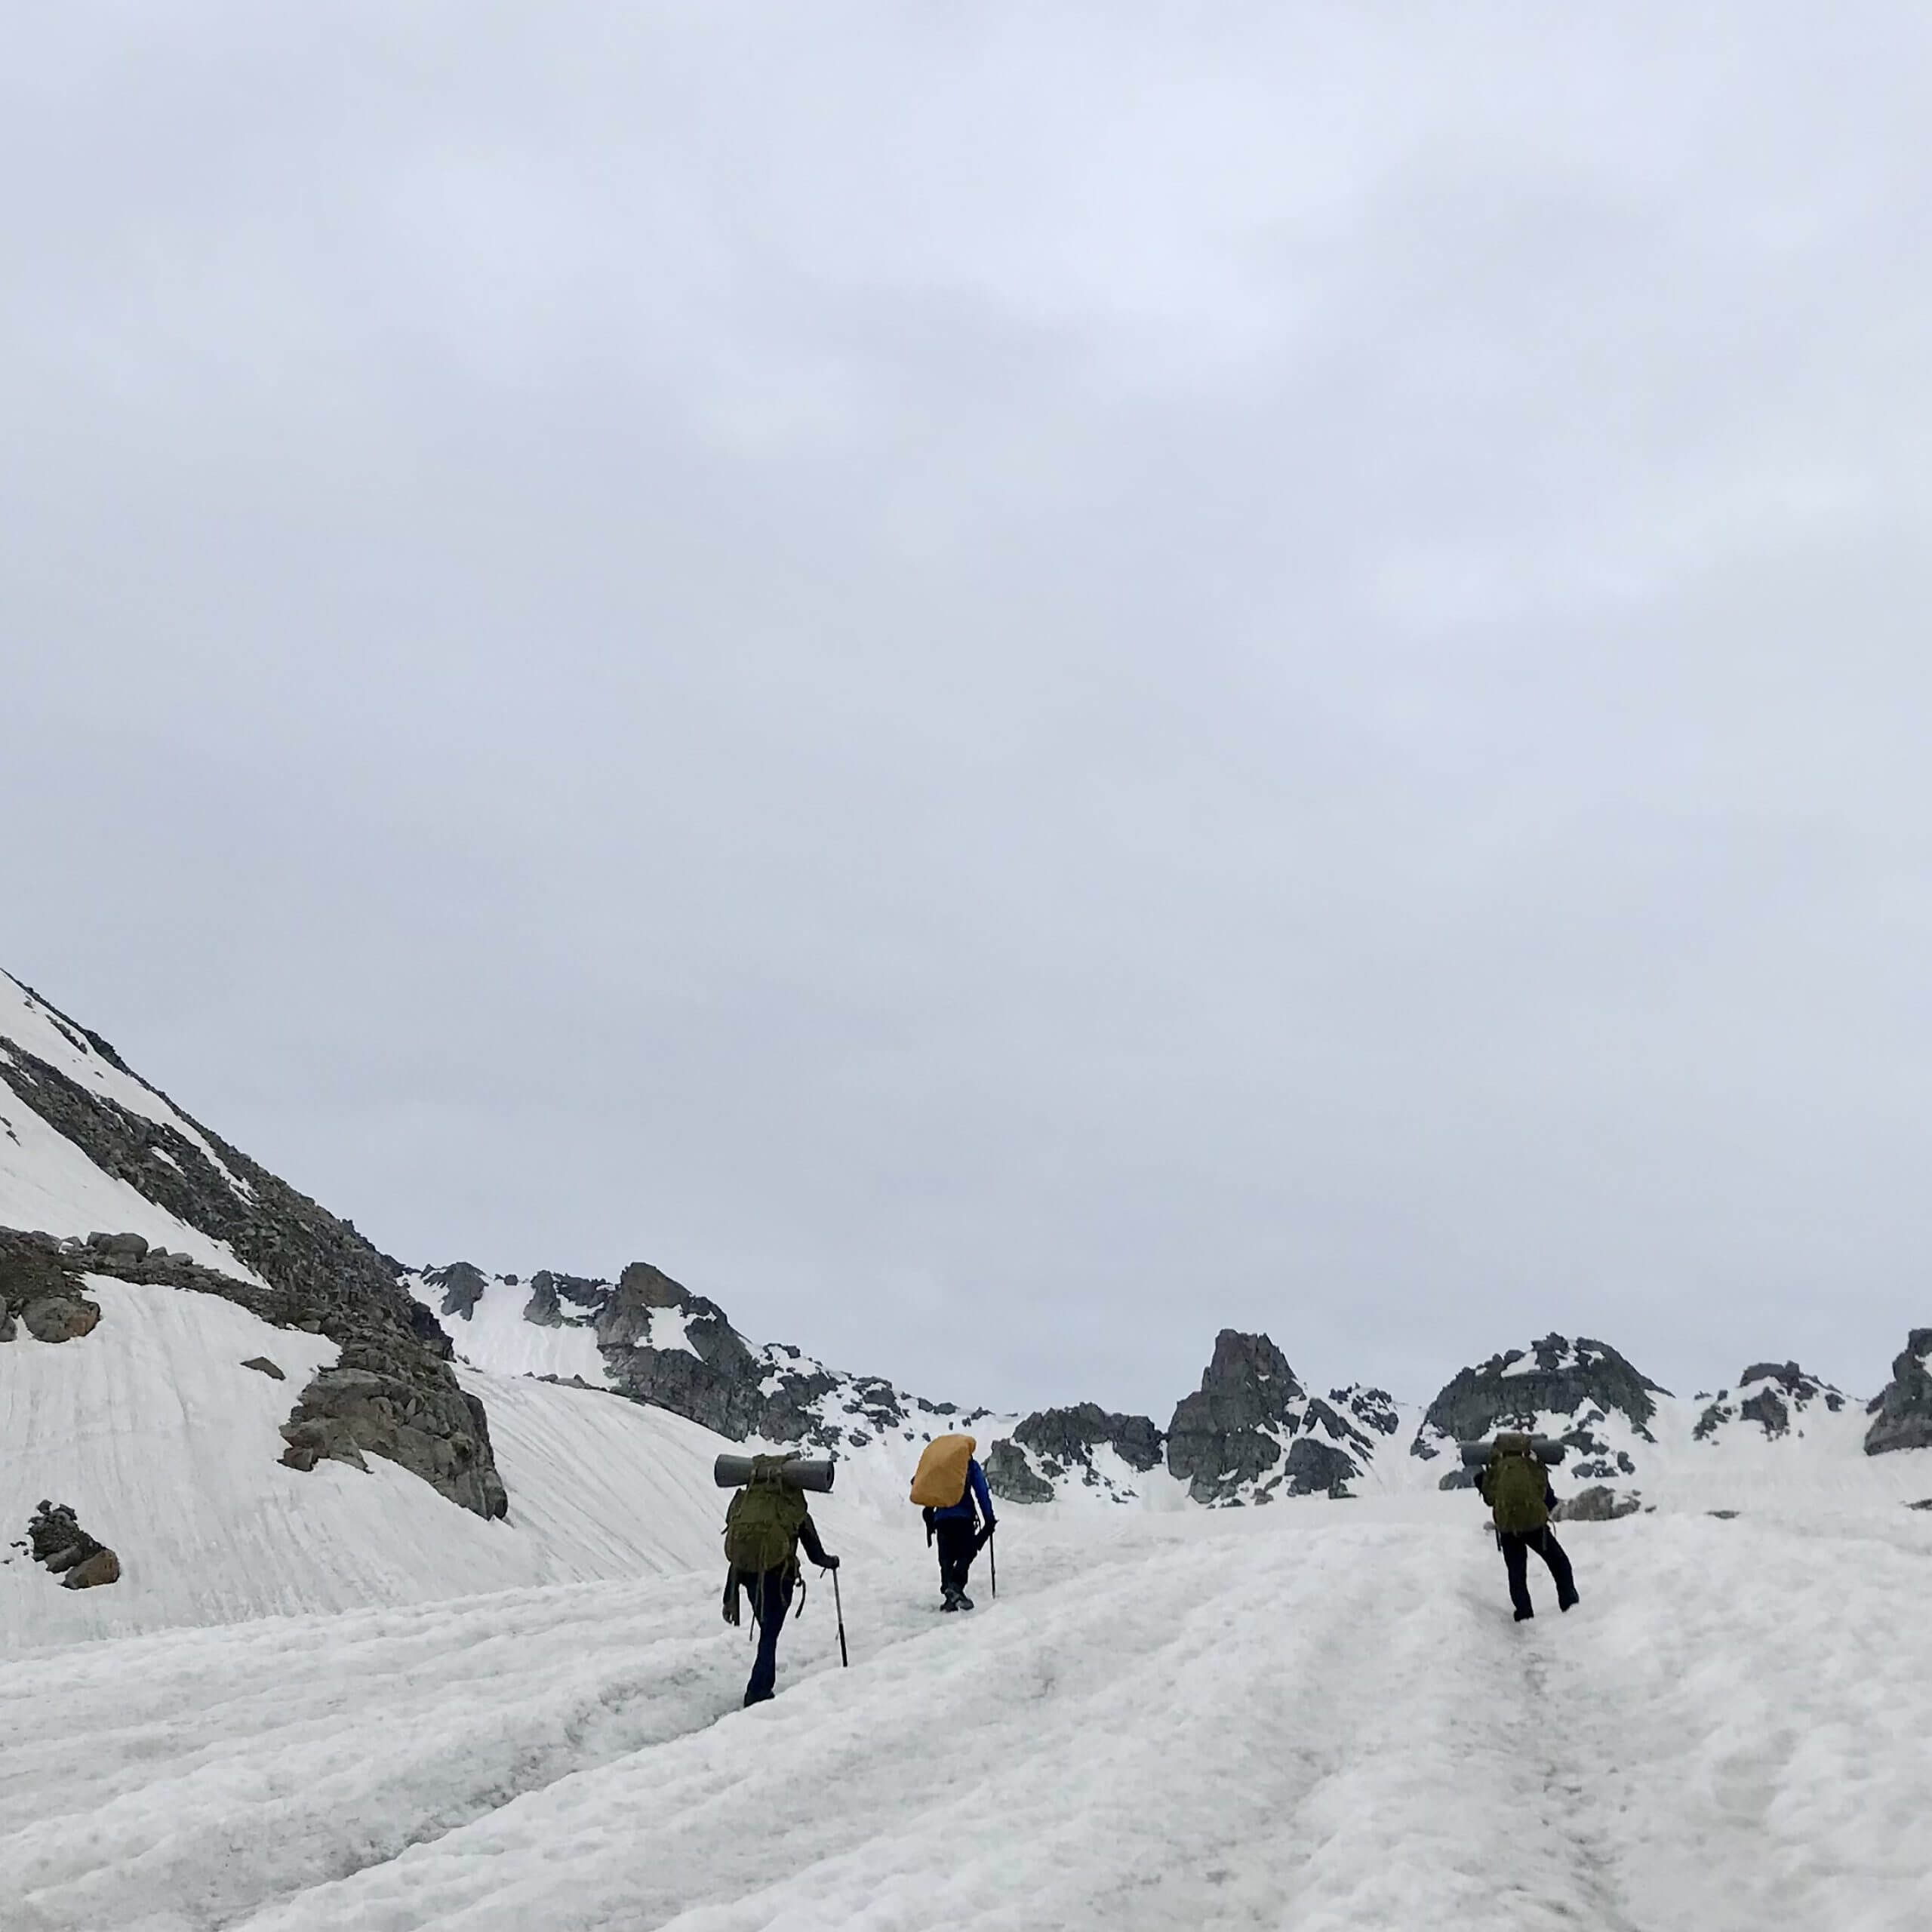 Day 5: Goru Thach to Bareh via Goru Pass | 15,750 feet | 8 hr